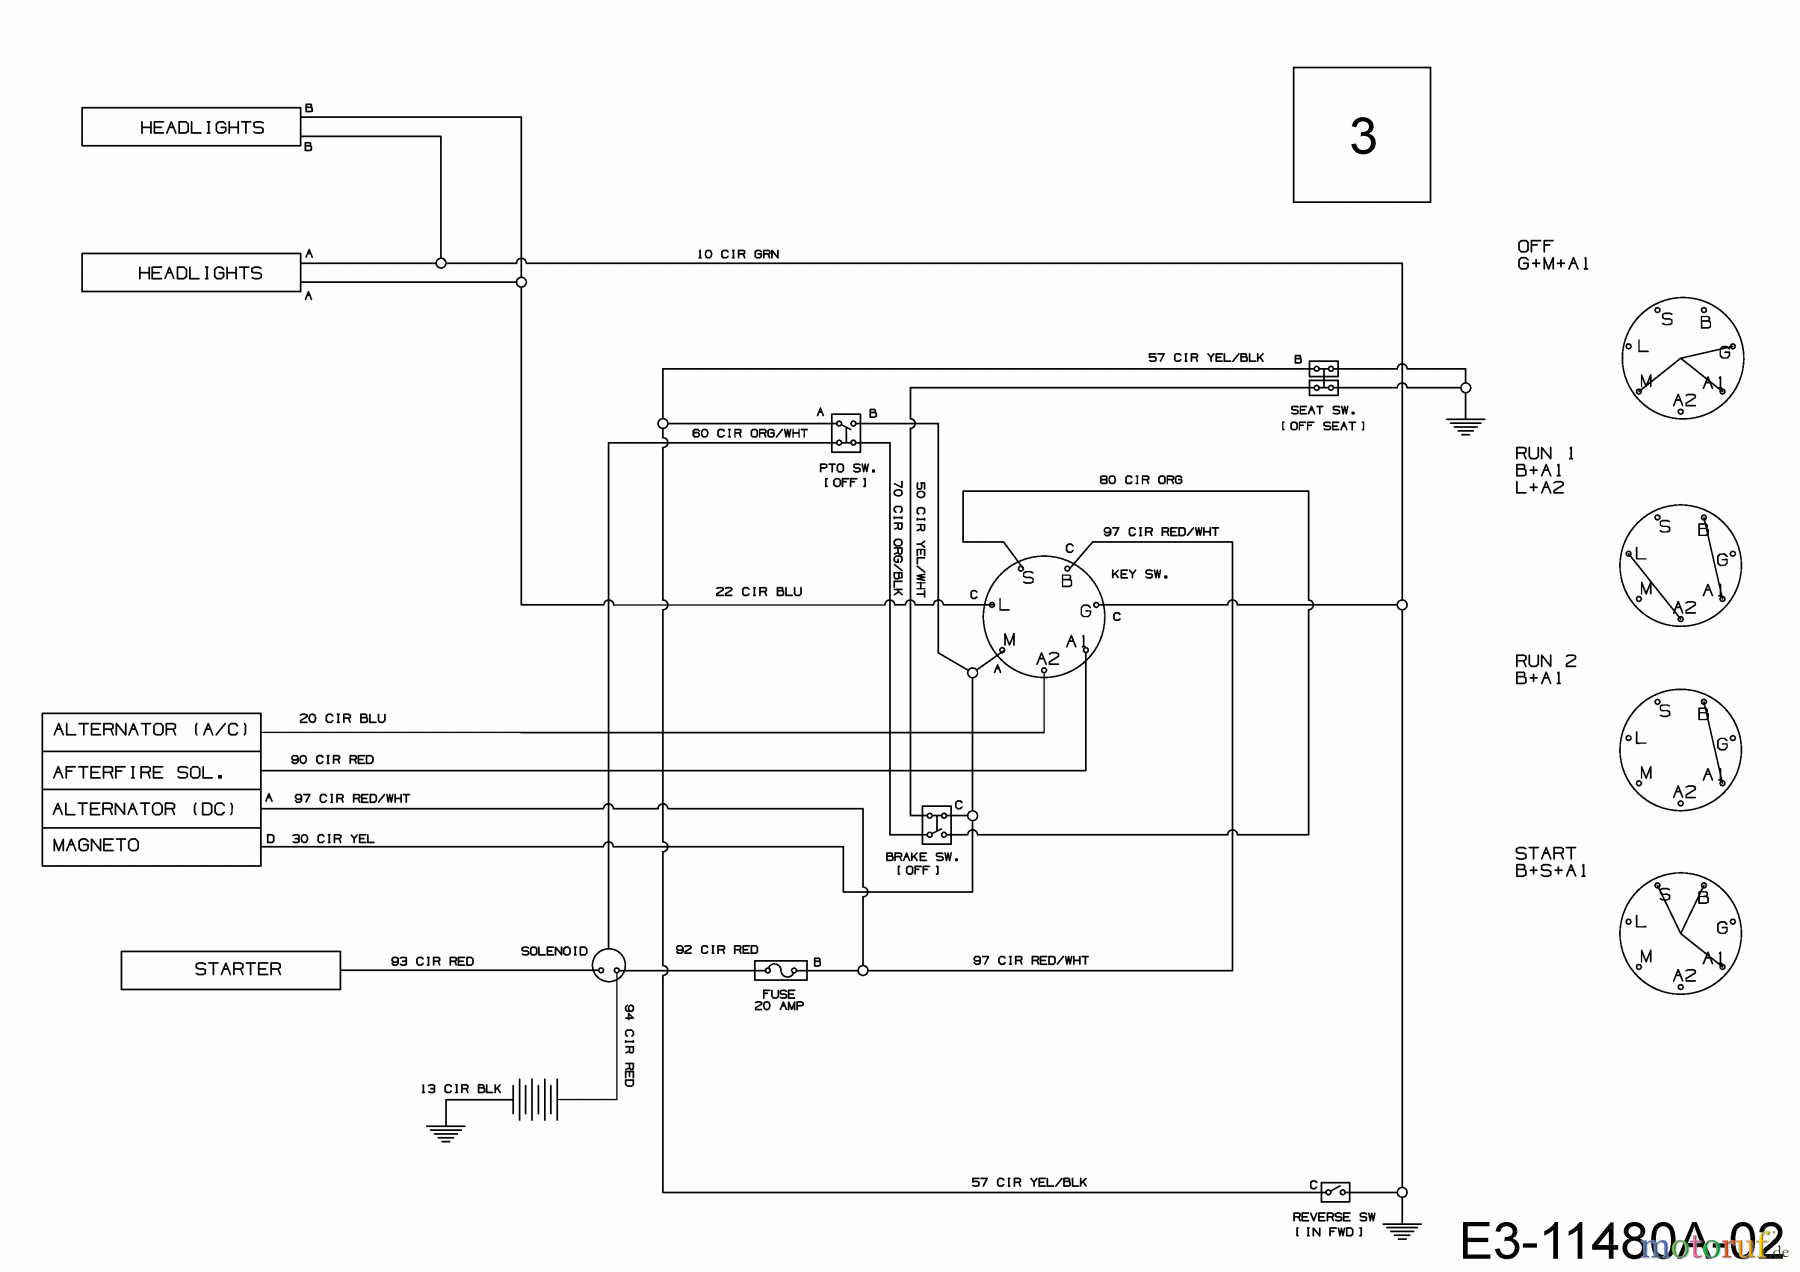  Bricolage Lawn tractors INV A13096 LB 13BH76SF648 (2021) Wiring diagram